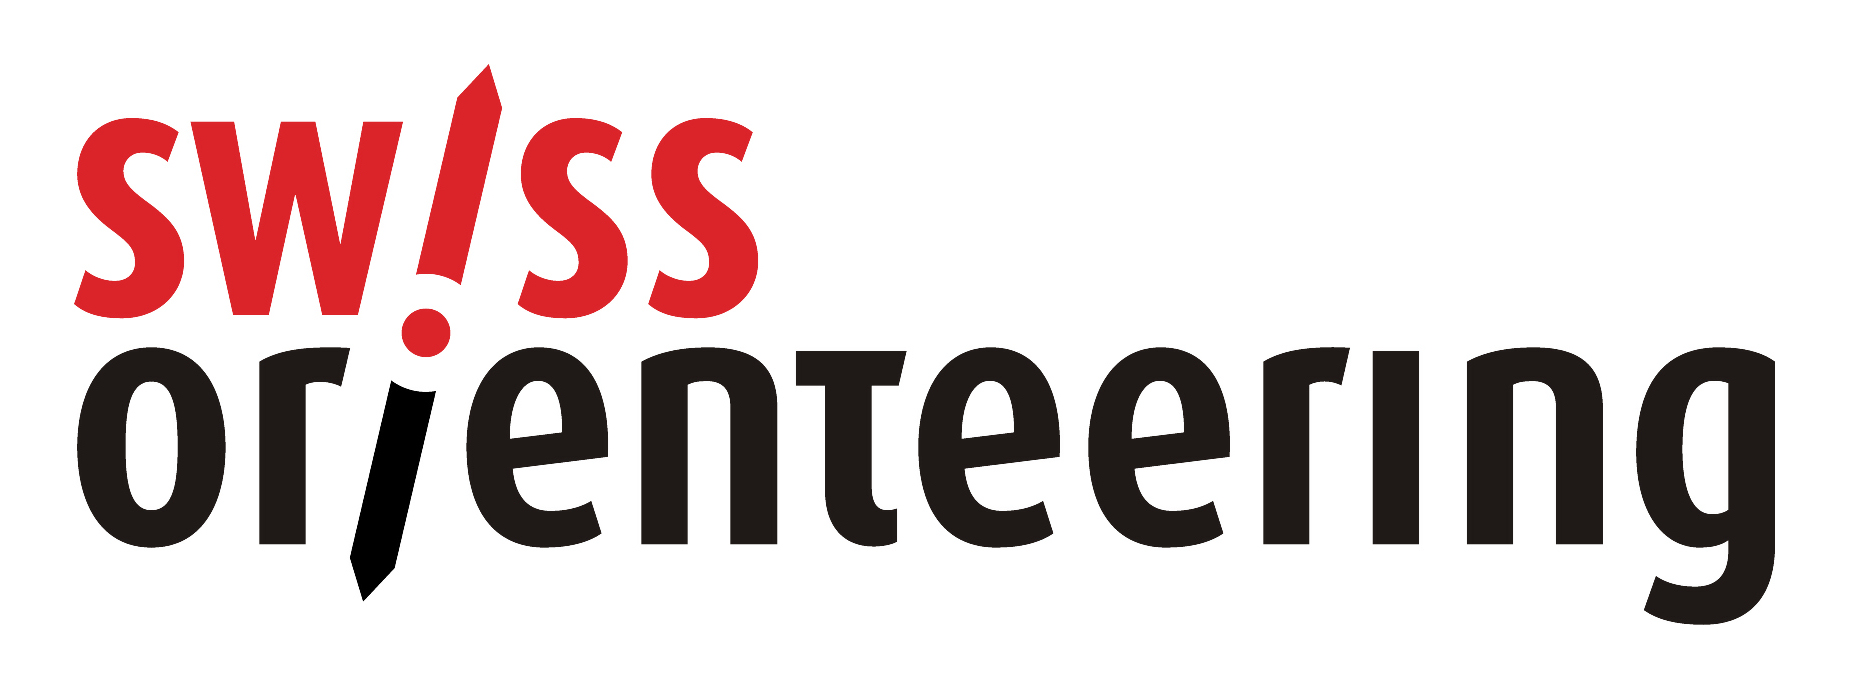 Swiss-Orienteering - logo